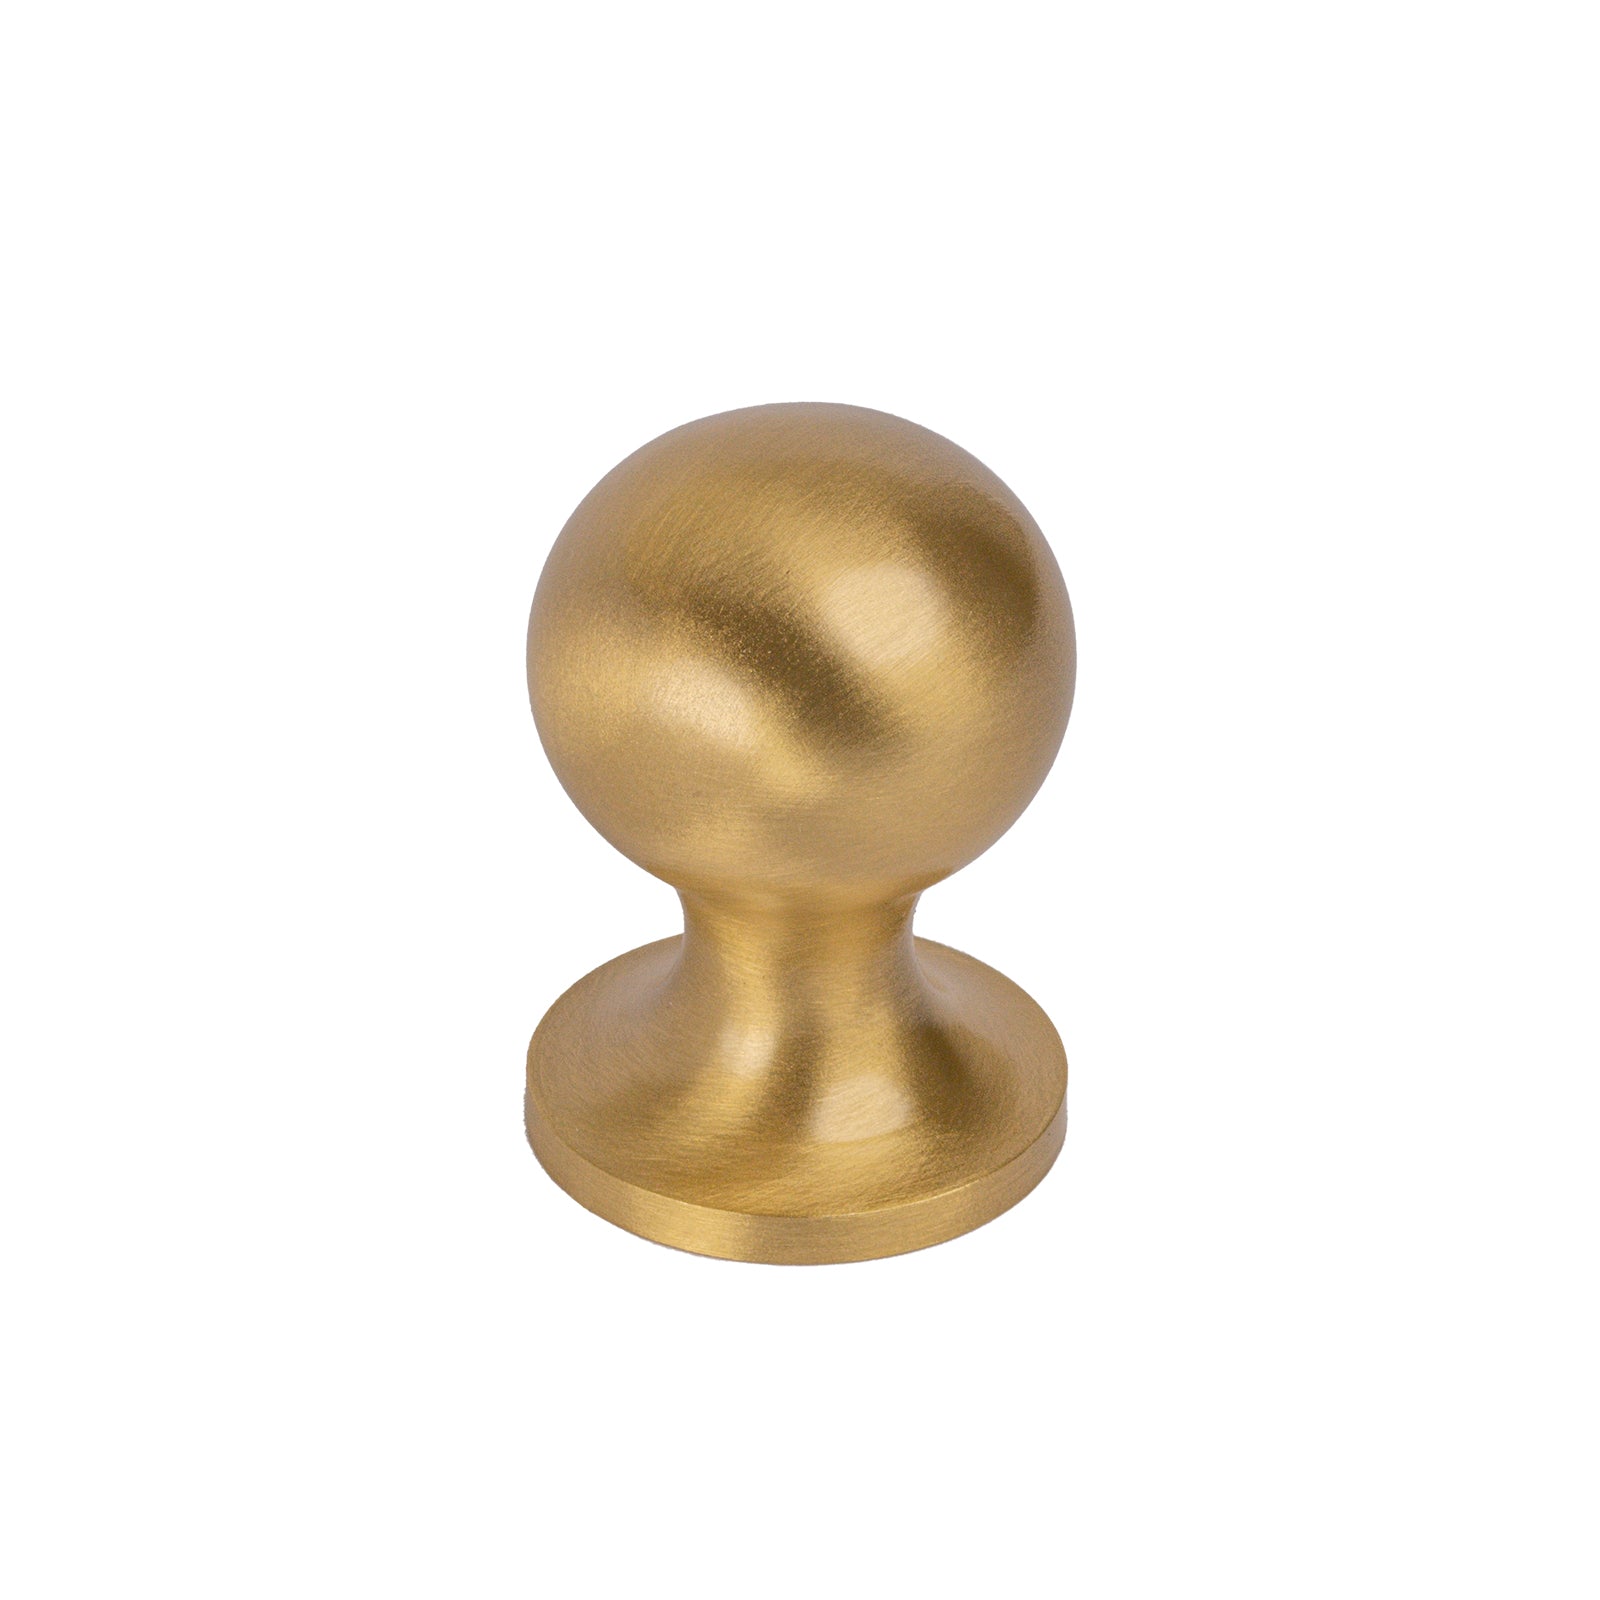 satin brass kitchen cabinet knob, ball shape knob